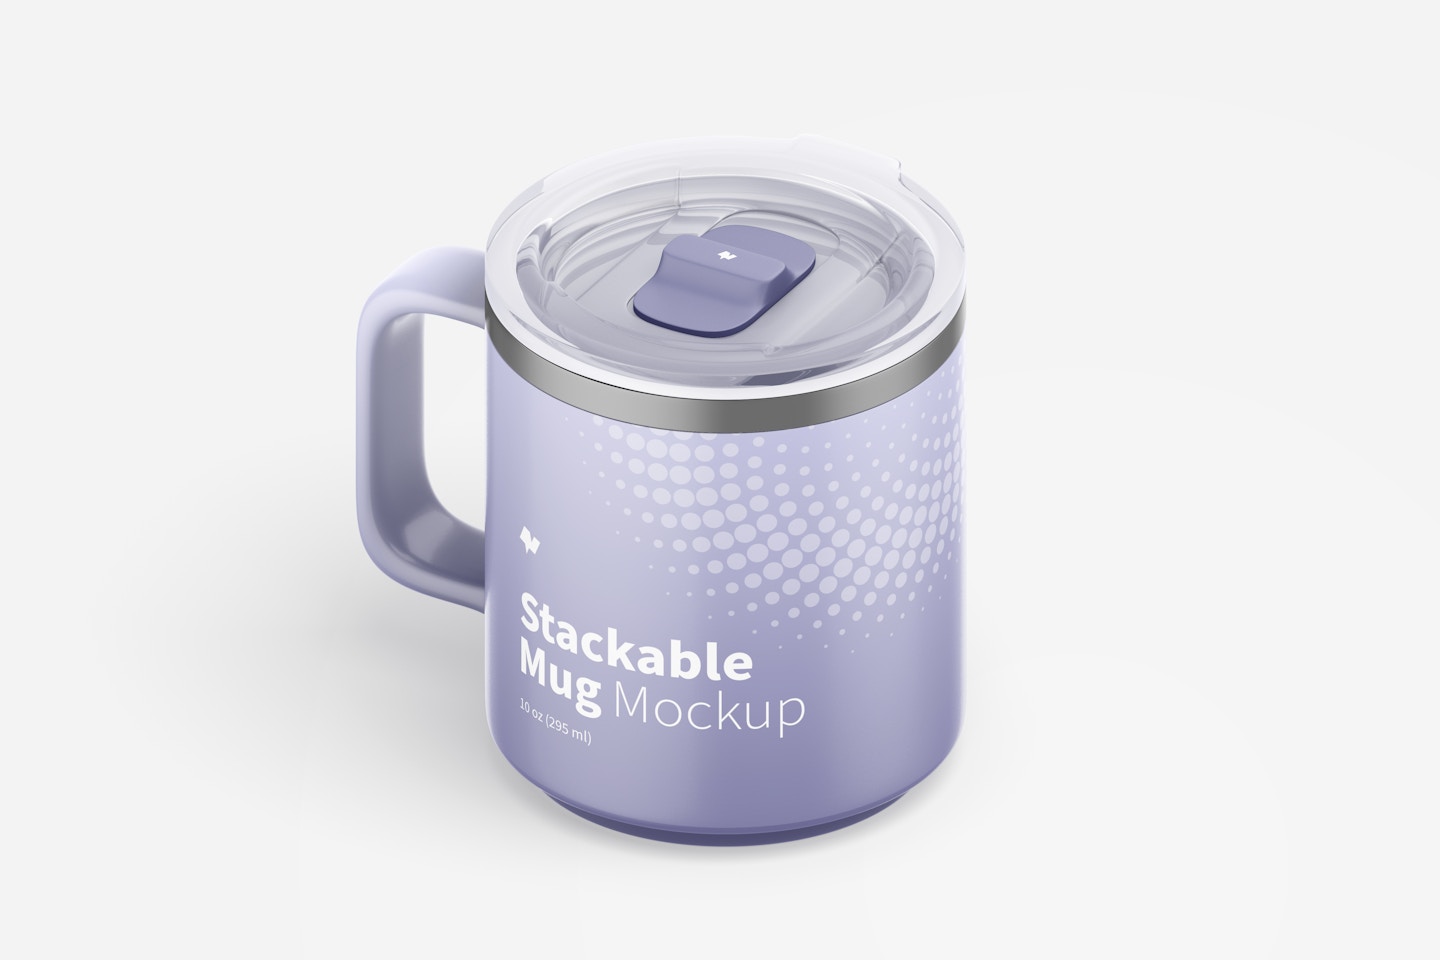 10 oz Stackable Mug Mockup, Isometric Left View